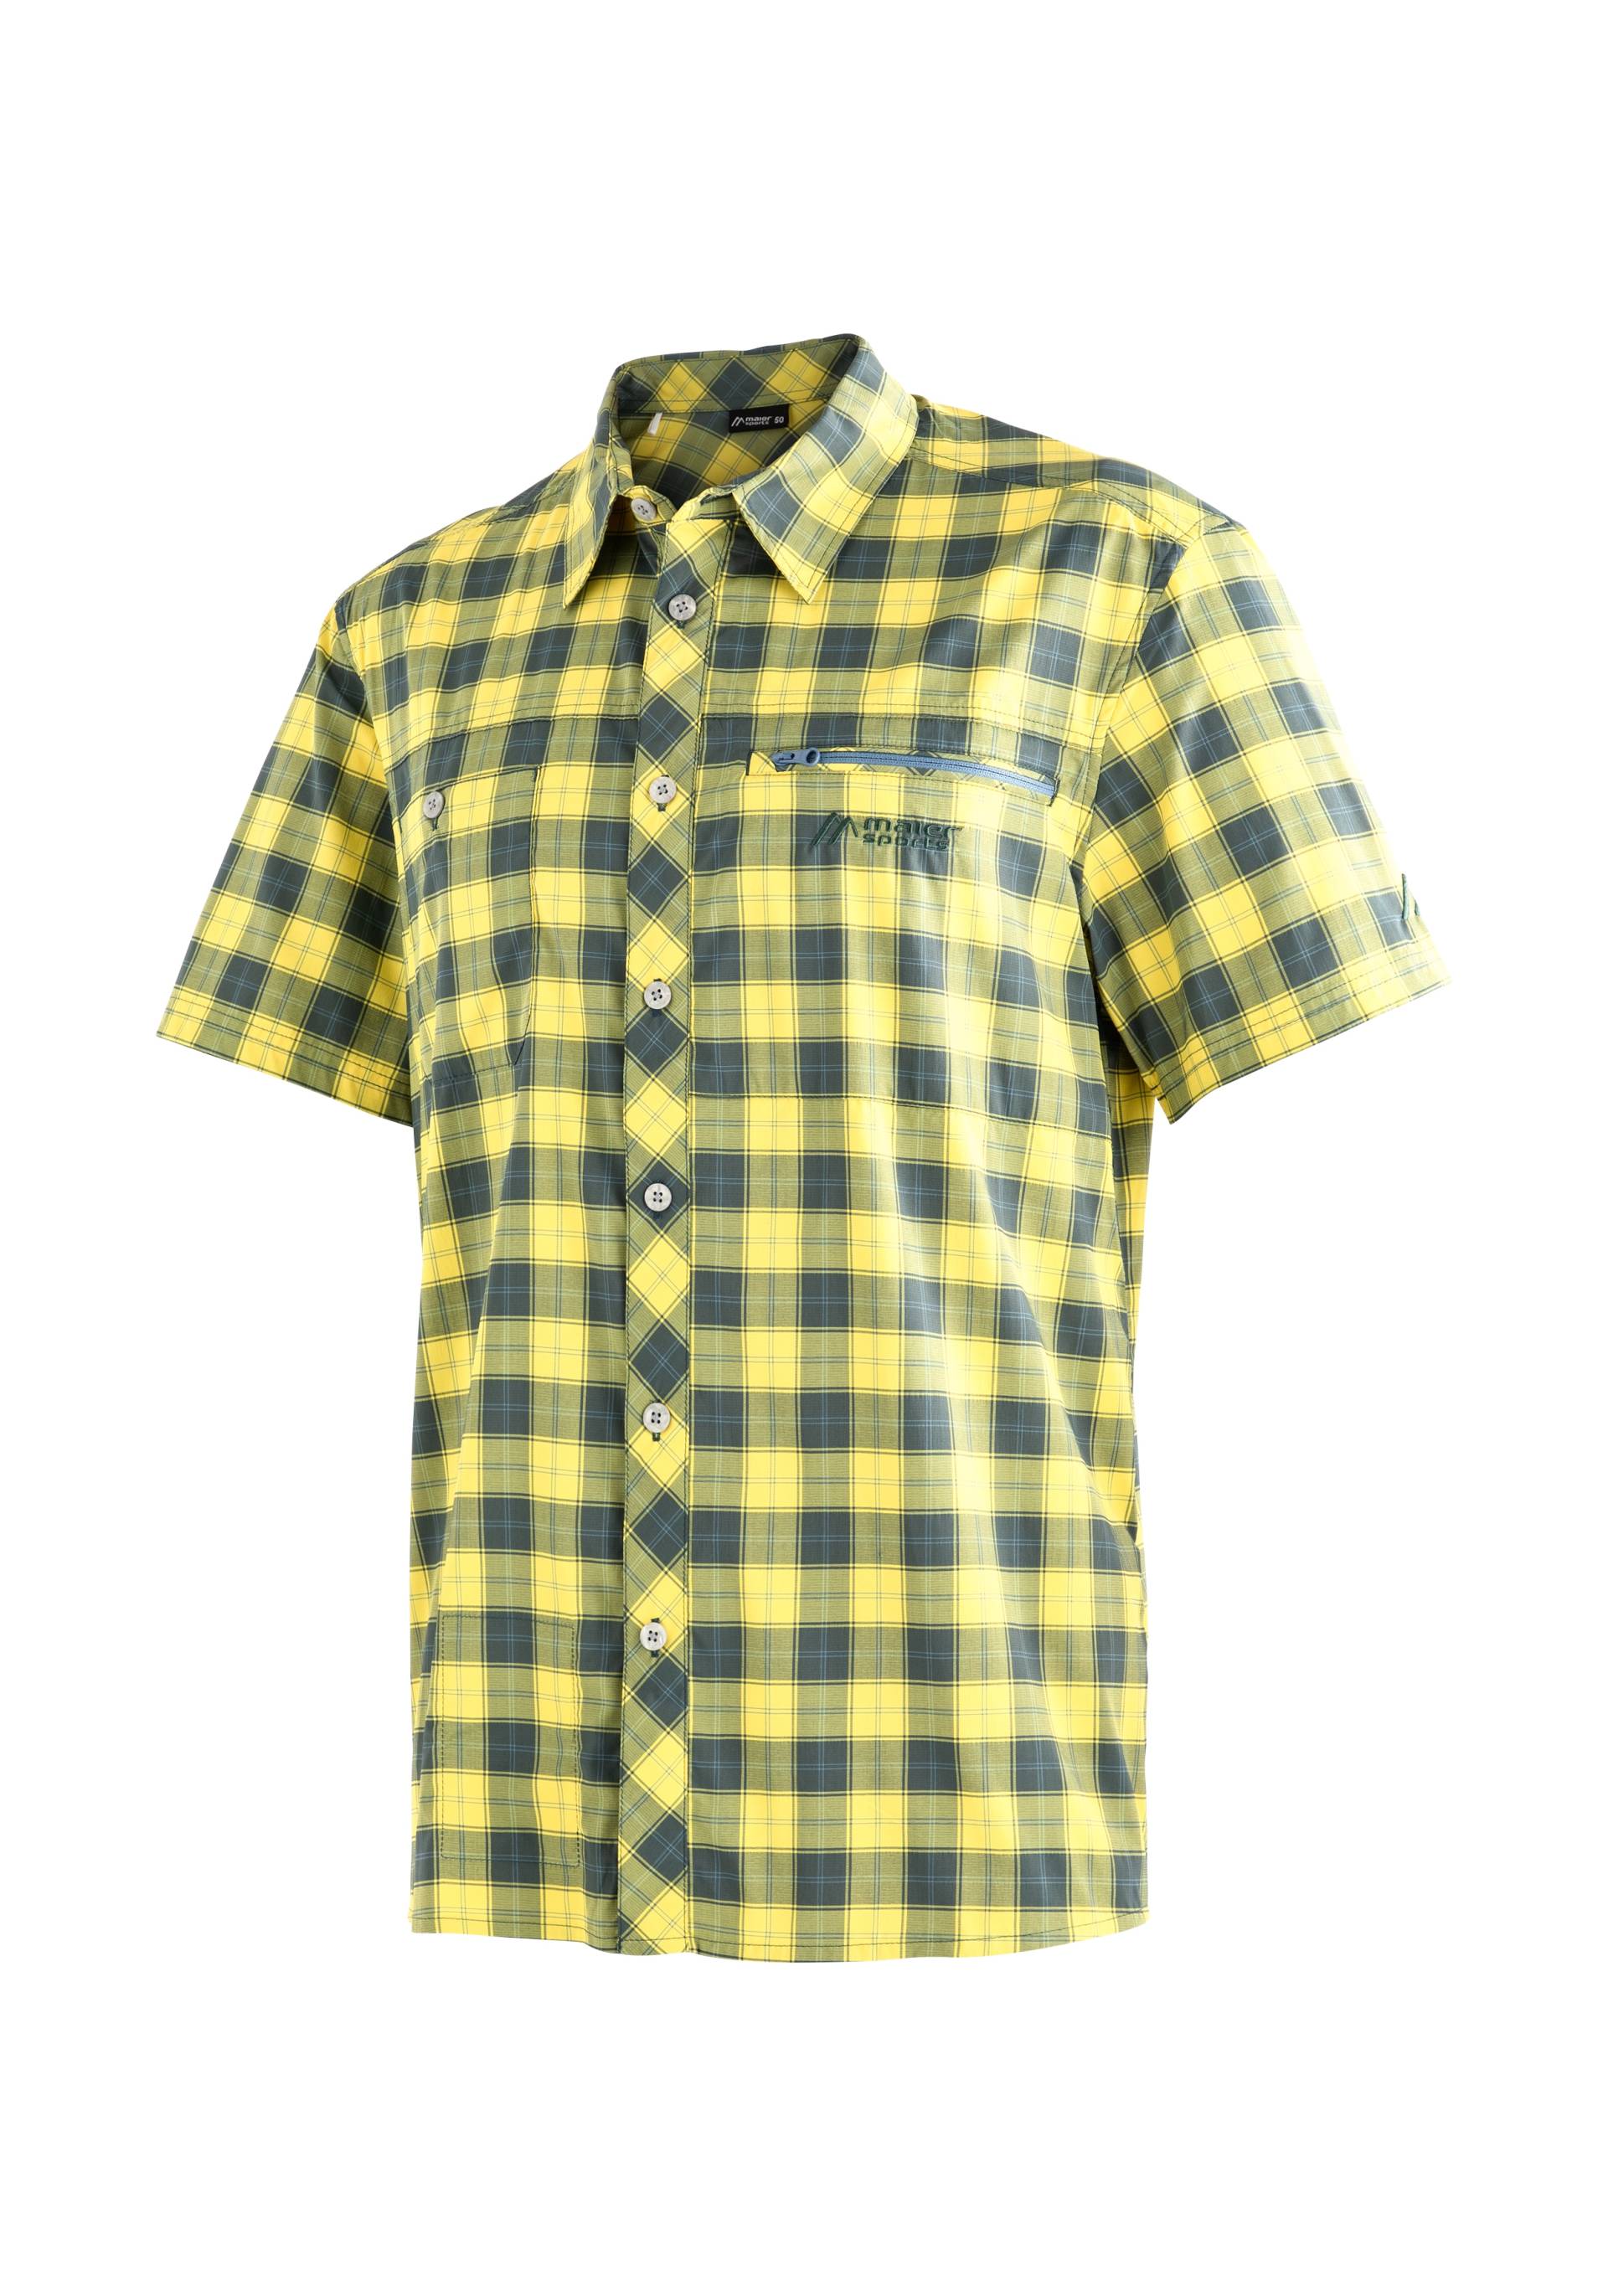 Maier Sports Outdoorhemd »Kasen S/S M«, kurzarm Herrenhemd, atmungsaktives Wanderhemd, Karohemd von maier sports